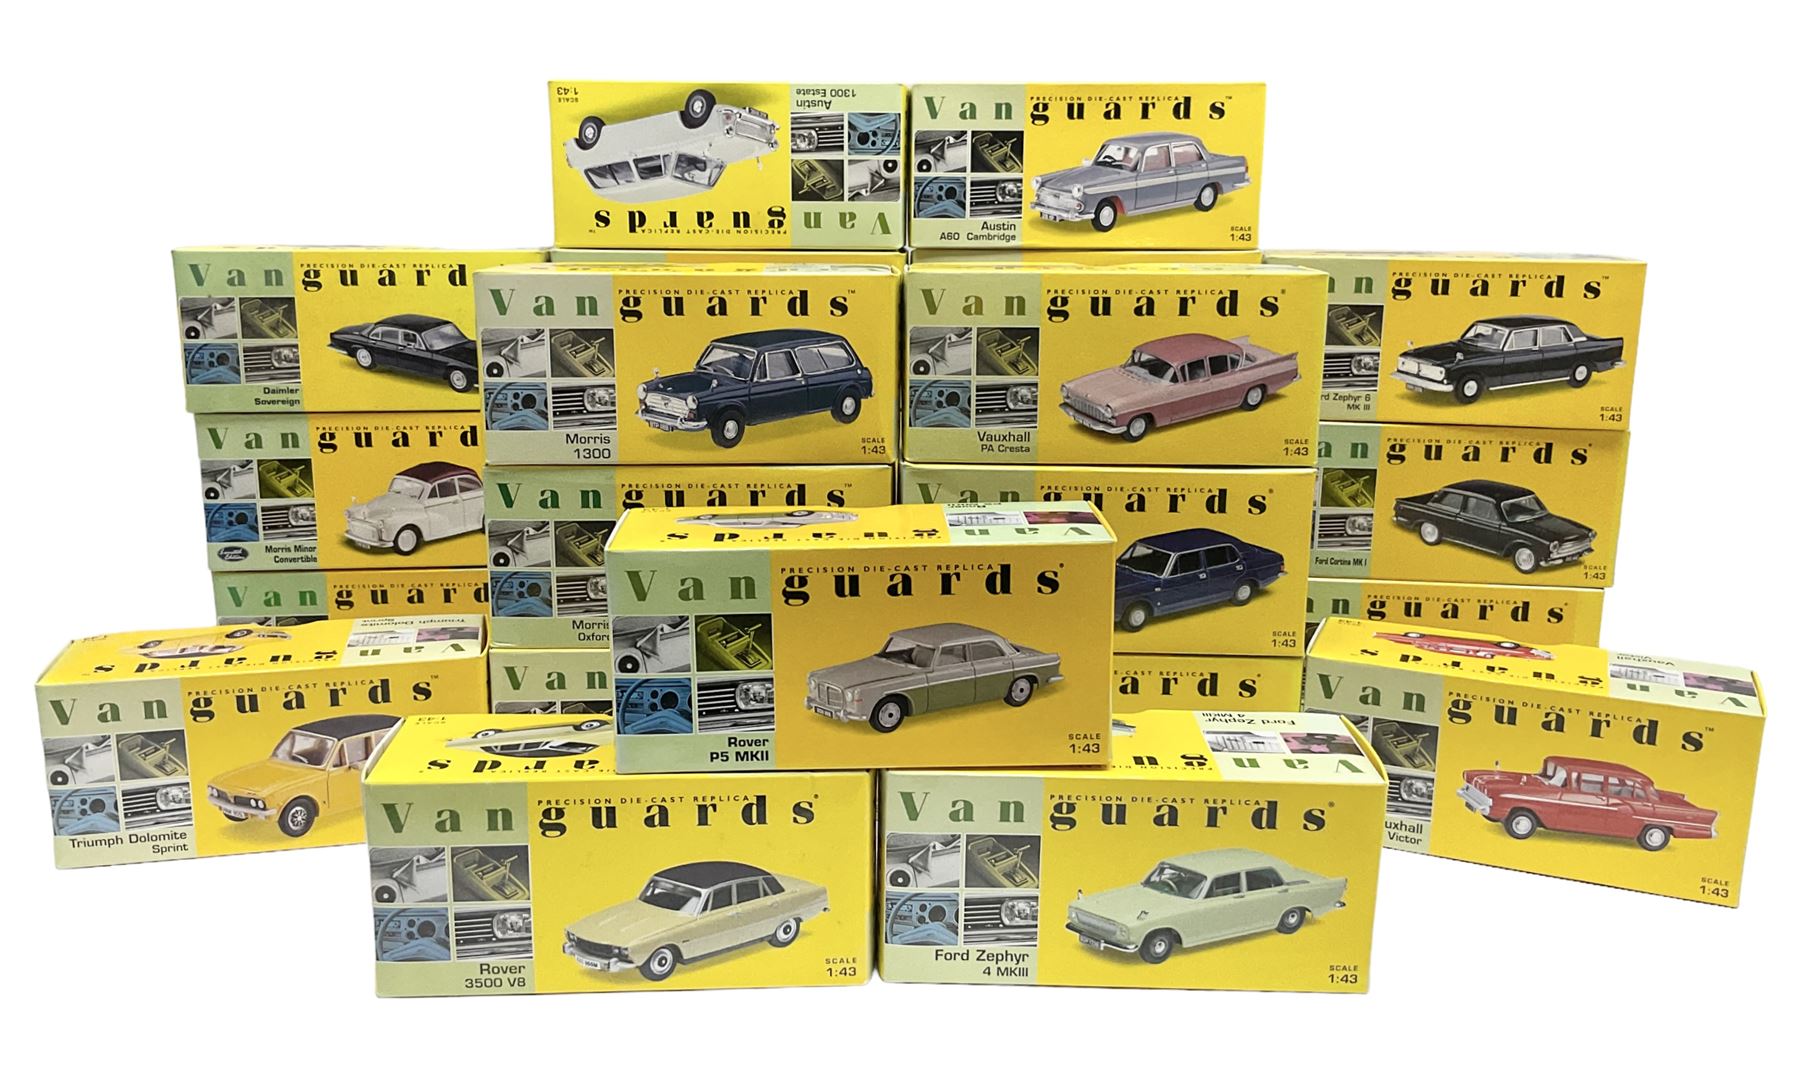 Twenty-five Lledo Vanguards 1:43 scale Limited Edition die-cast models including Ford Popular Saloon